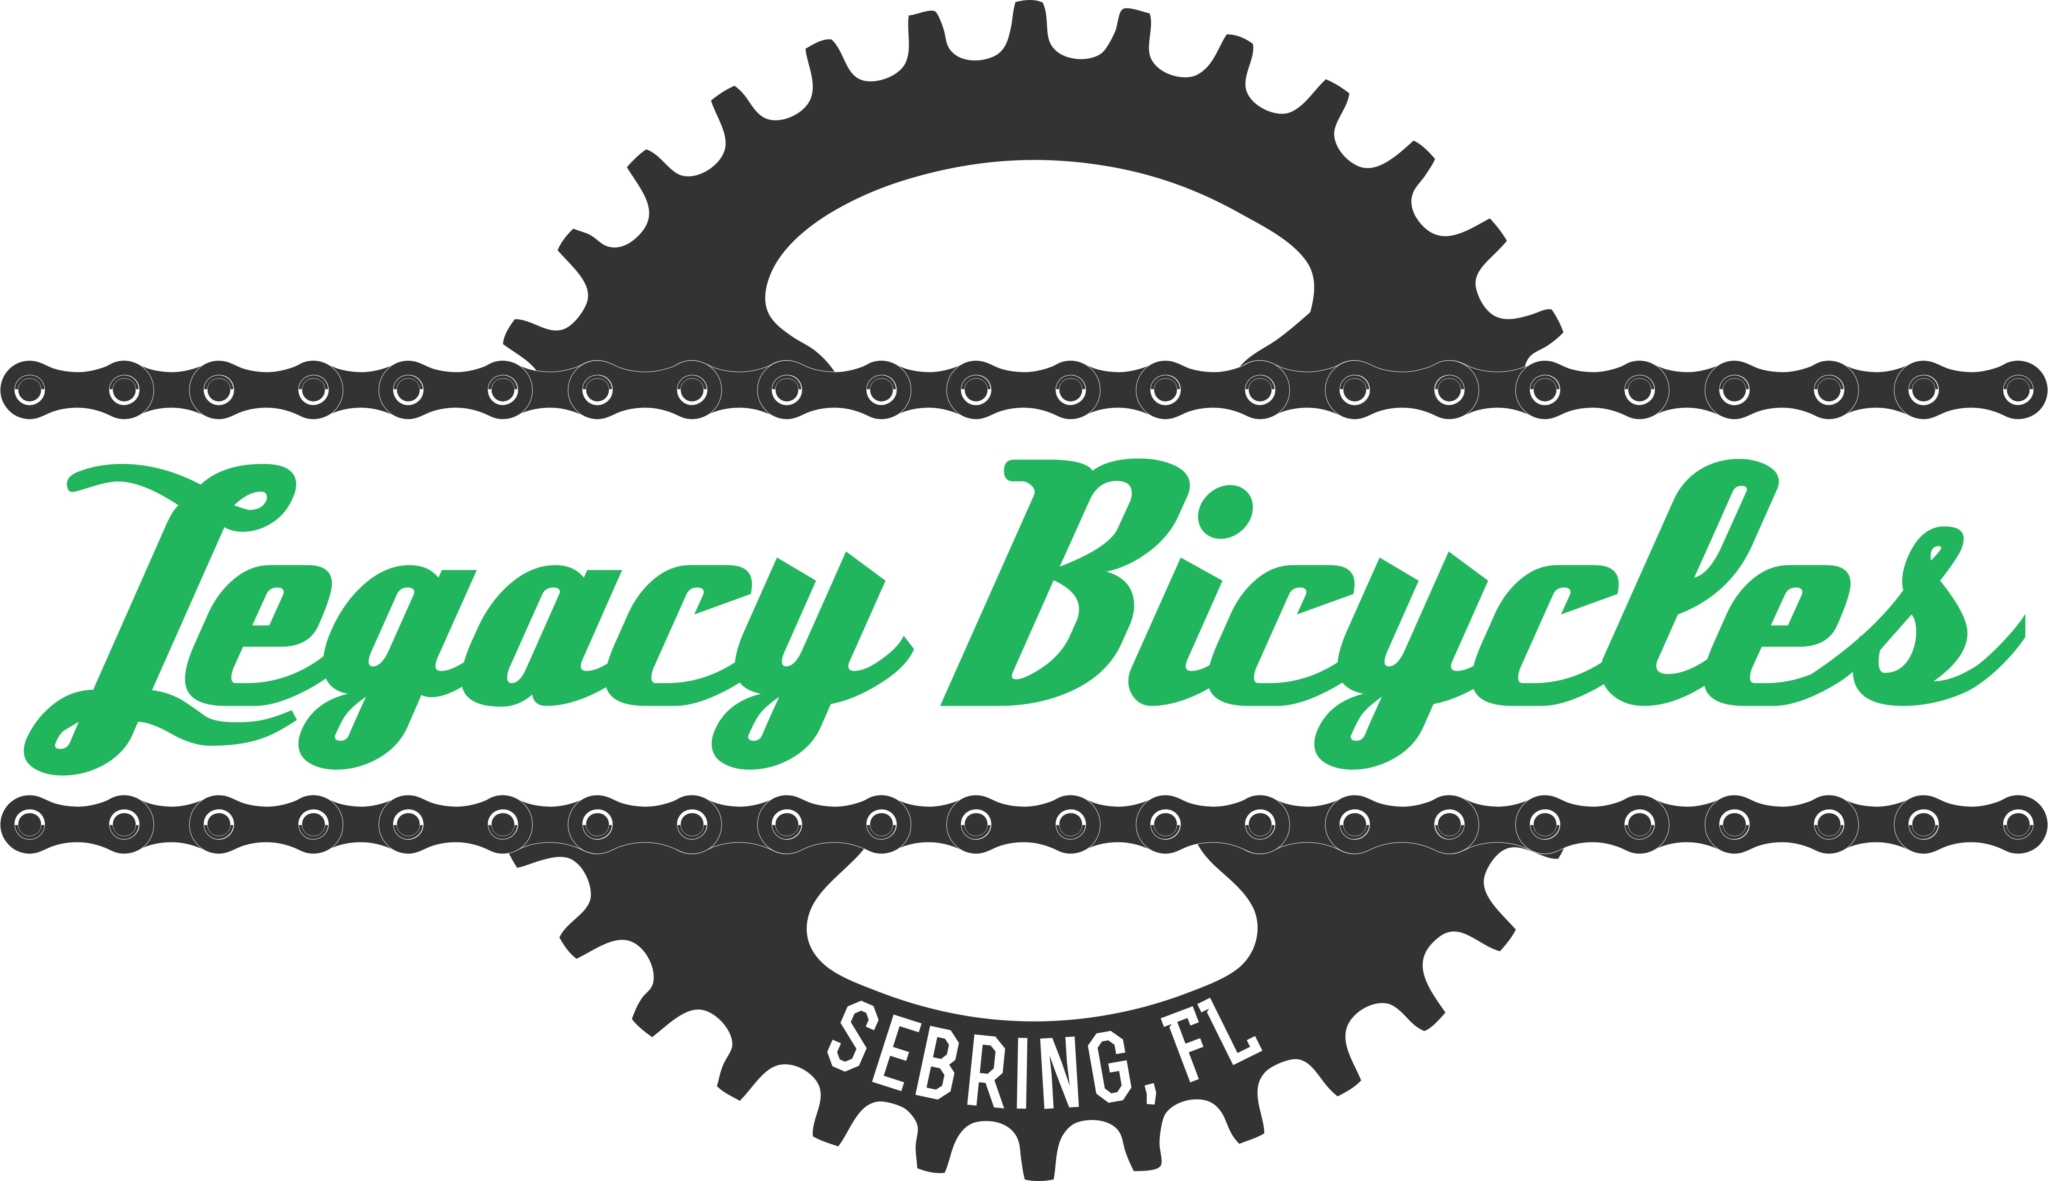 Legacy bicycles sebring, fl.